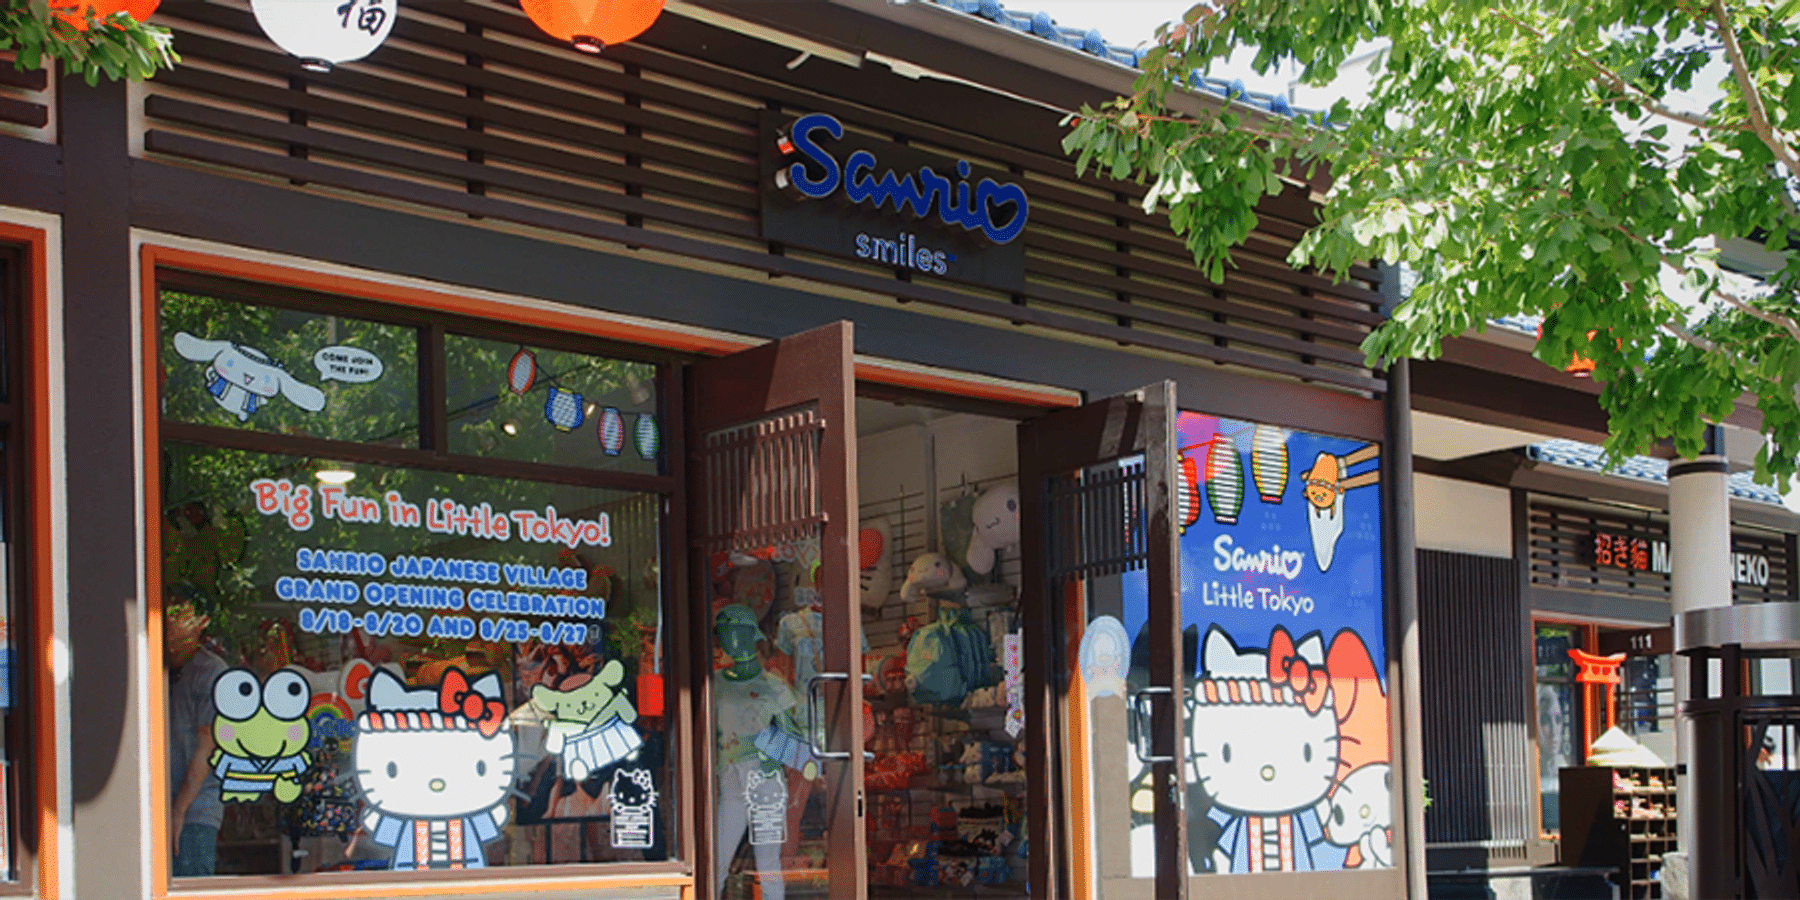 Sanrio Store in Downey California, This was the 8th Sanrio …